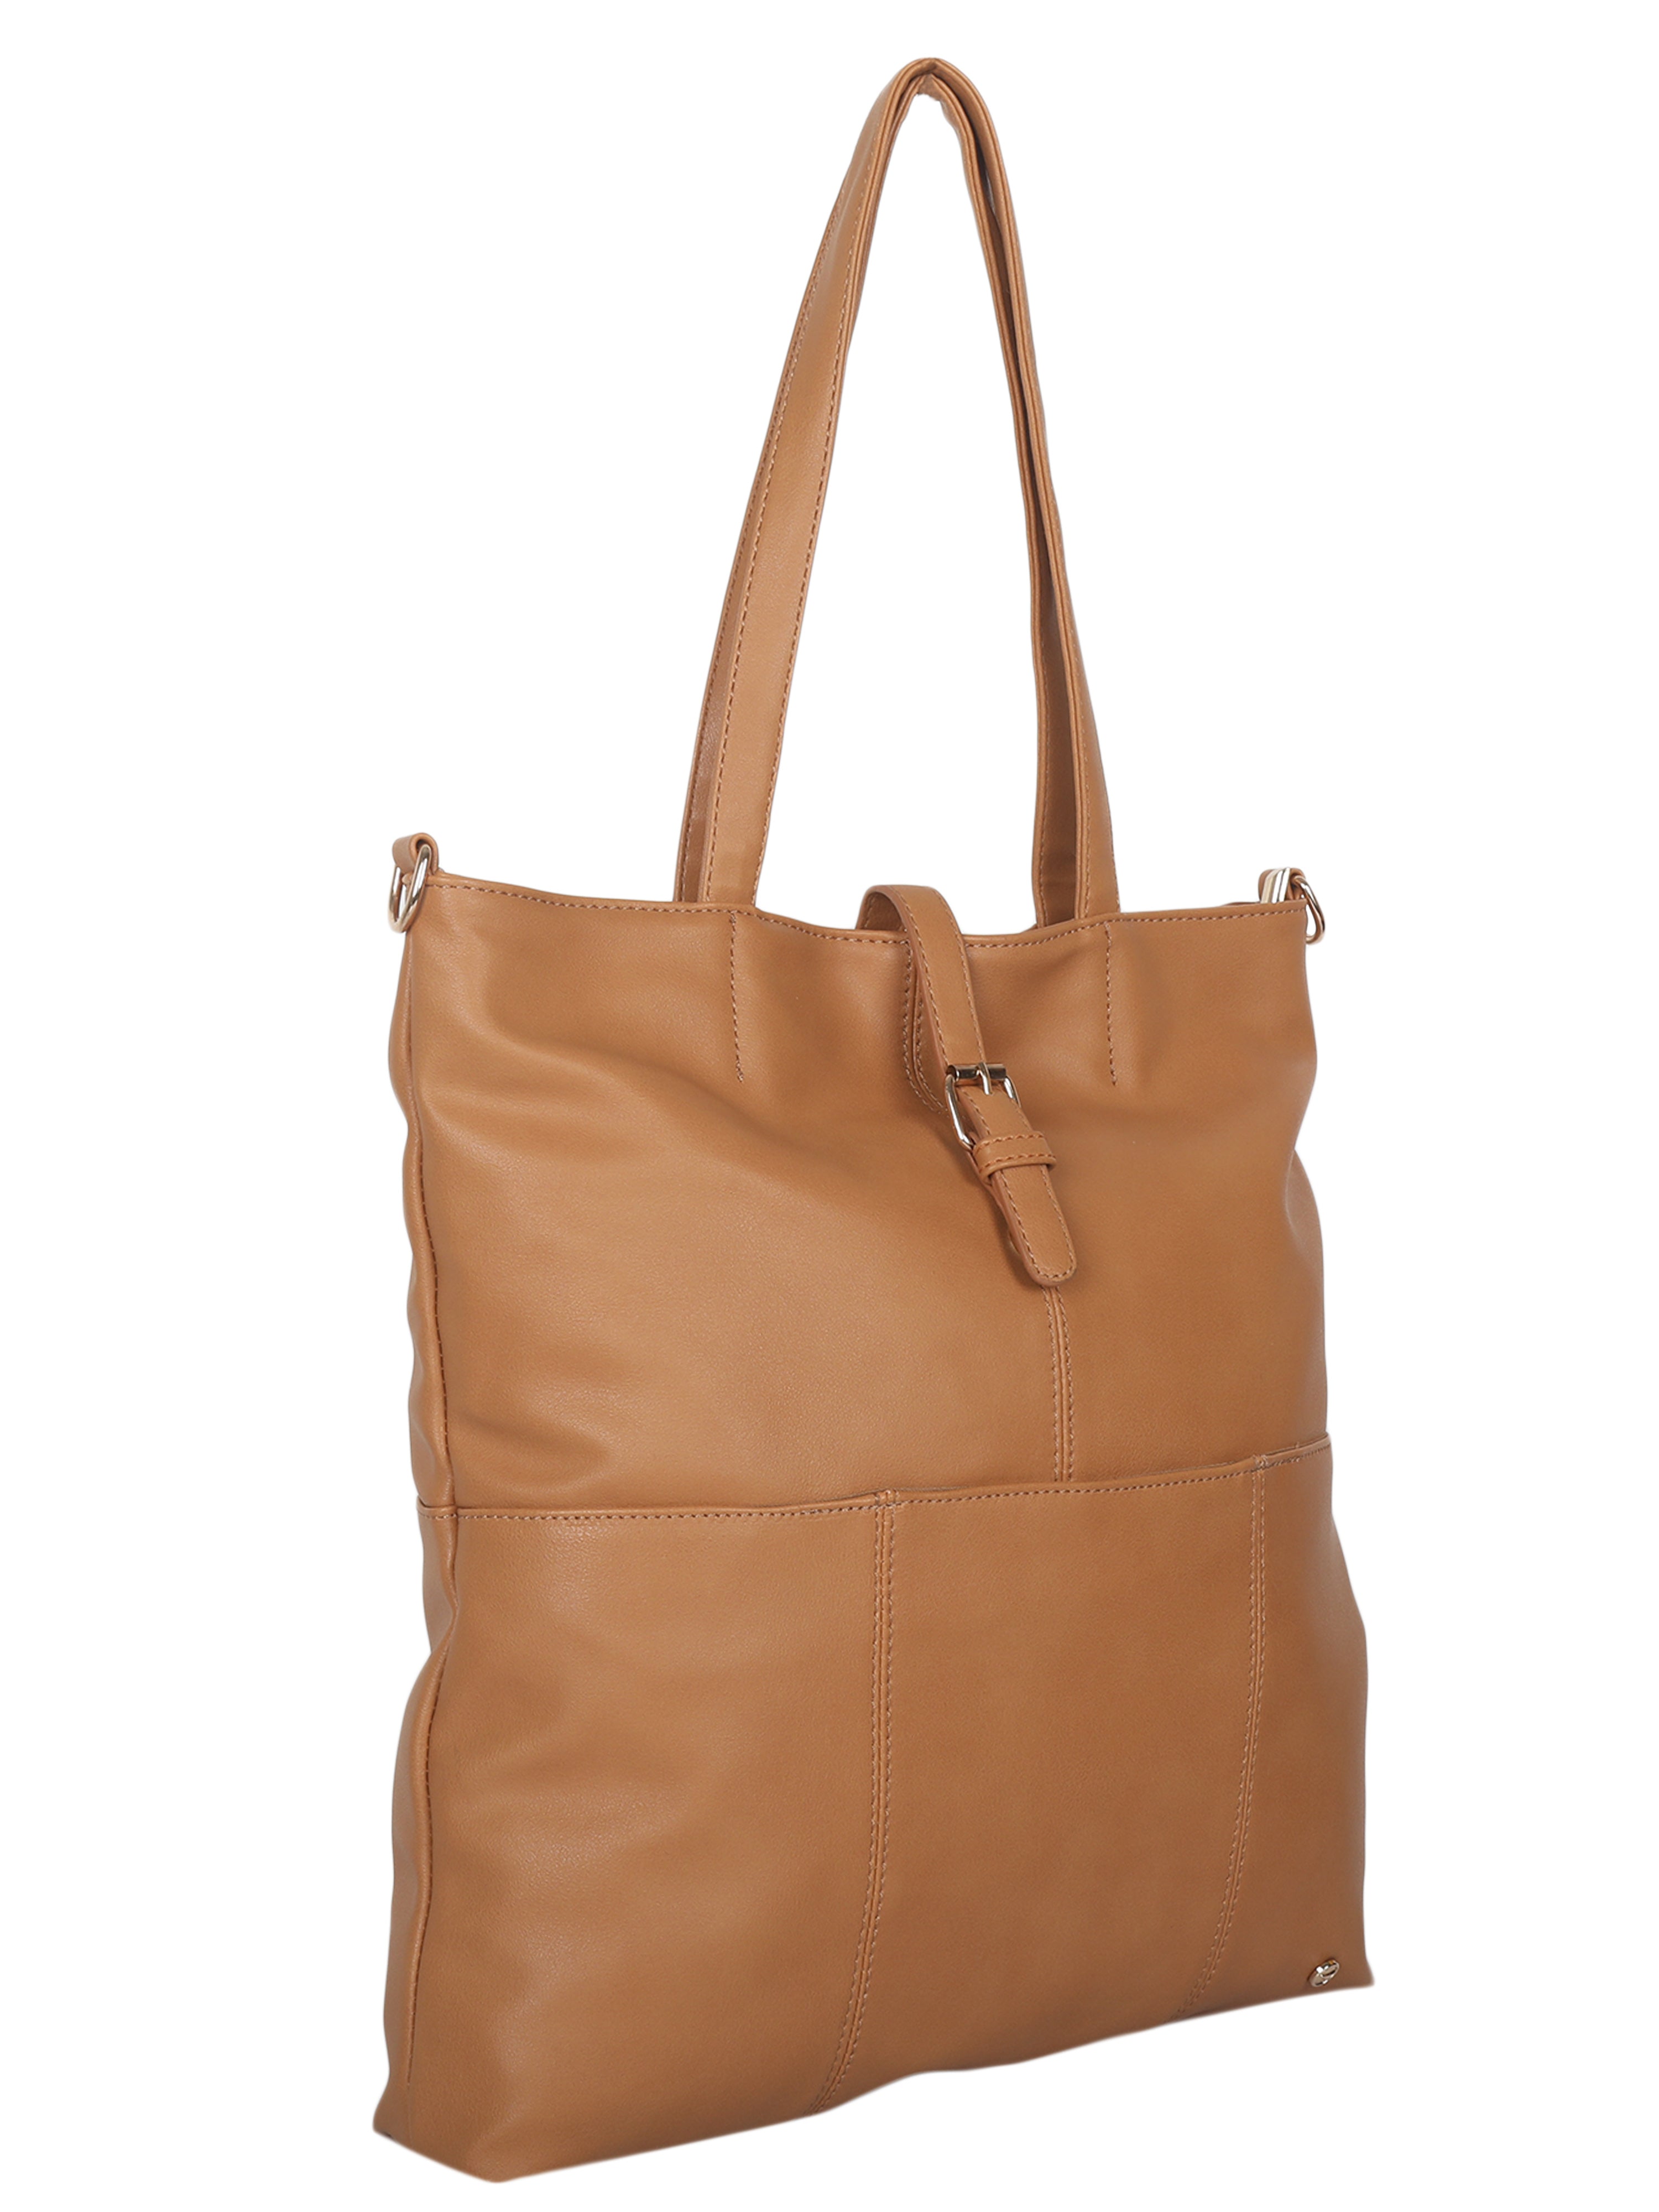 Bulchee Ladies Tan Shoulder Bag - HBPUF02.5-19